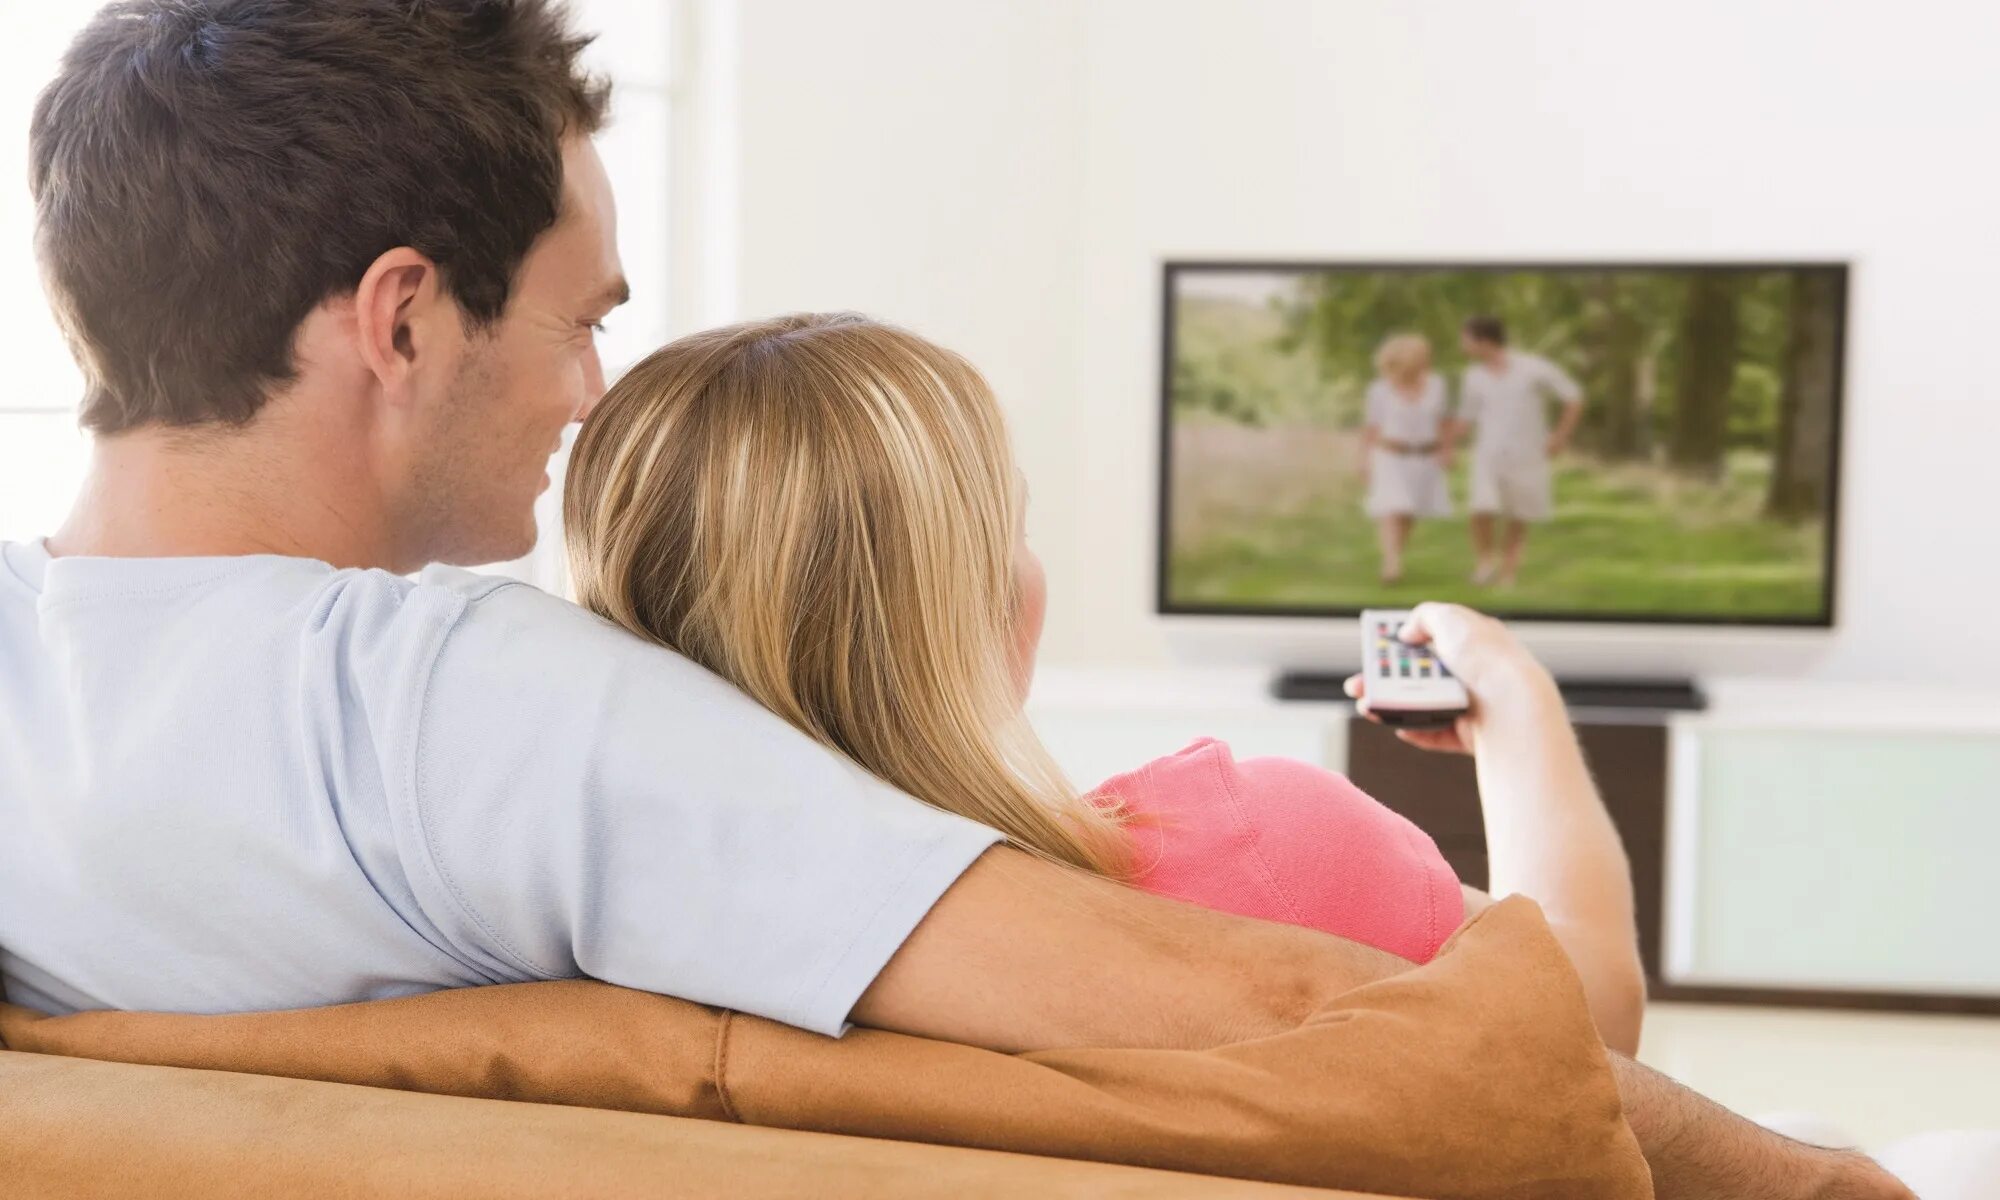 Телевизор в жизни человека. Человек телевизор. Человек перед телевизором. Пара перед телевизором. Пара на диване перед телевизором.